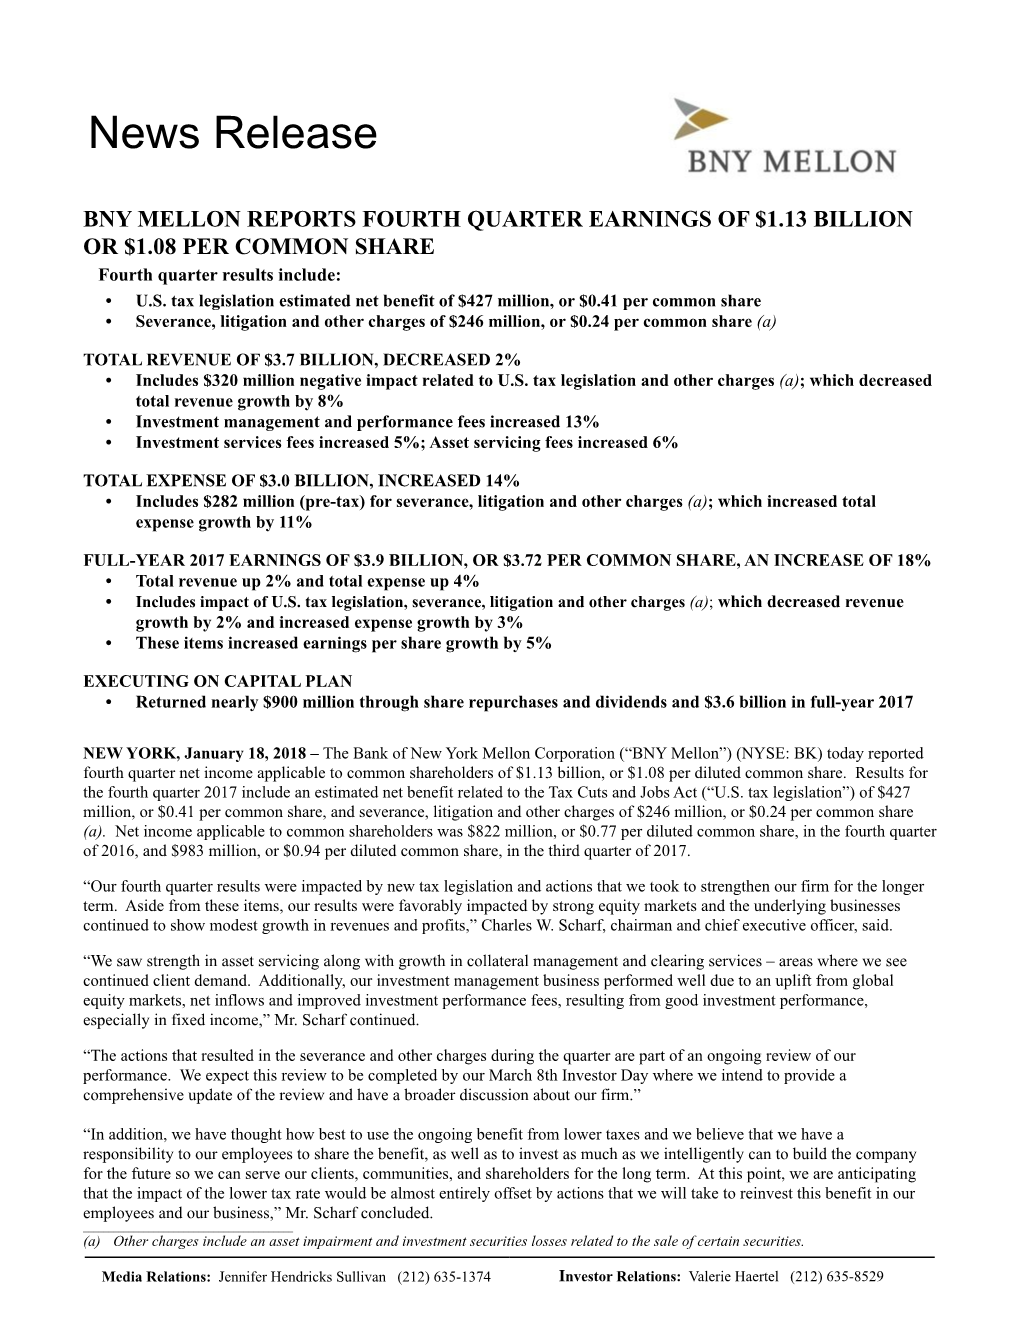 BNY Mellon Financial Results 4Q 2017 Press Release